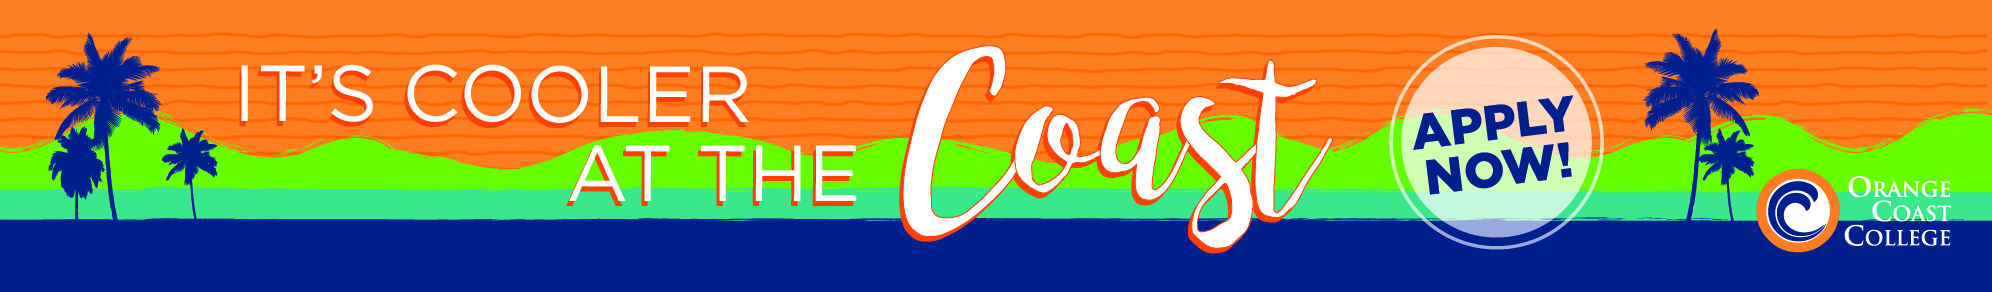 It's Cooler at the Coast: OCC Orange Coast College Costa Mesa Orange County California